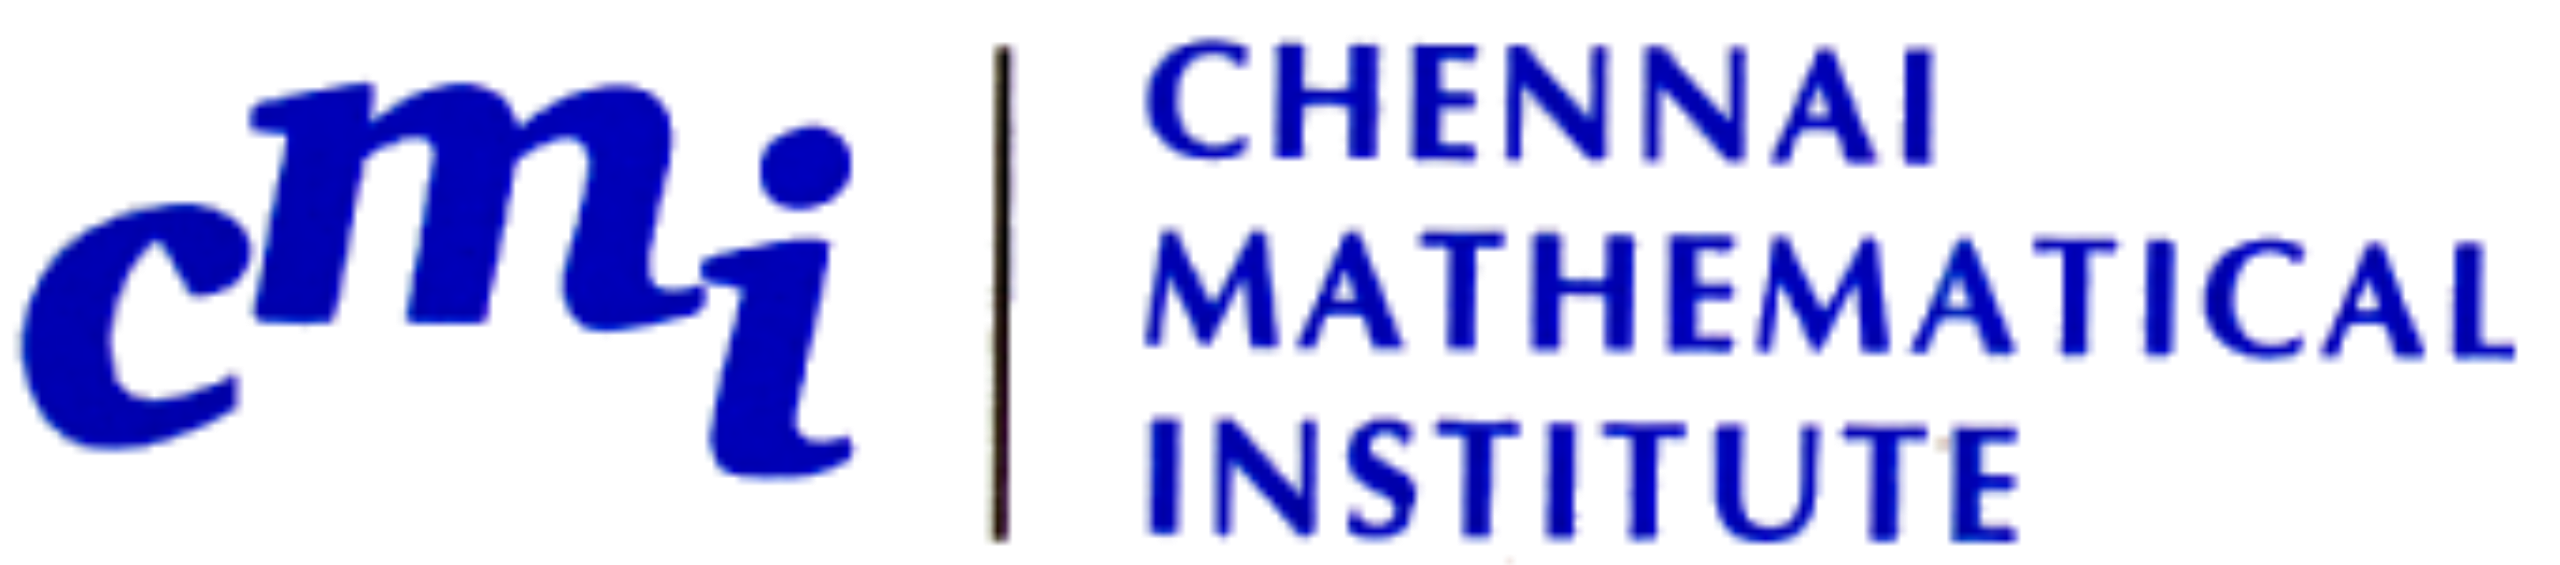 Lodha Genius Program is partnered with Chennai Mathematical Institute